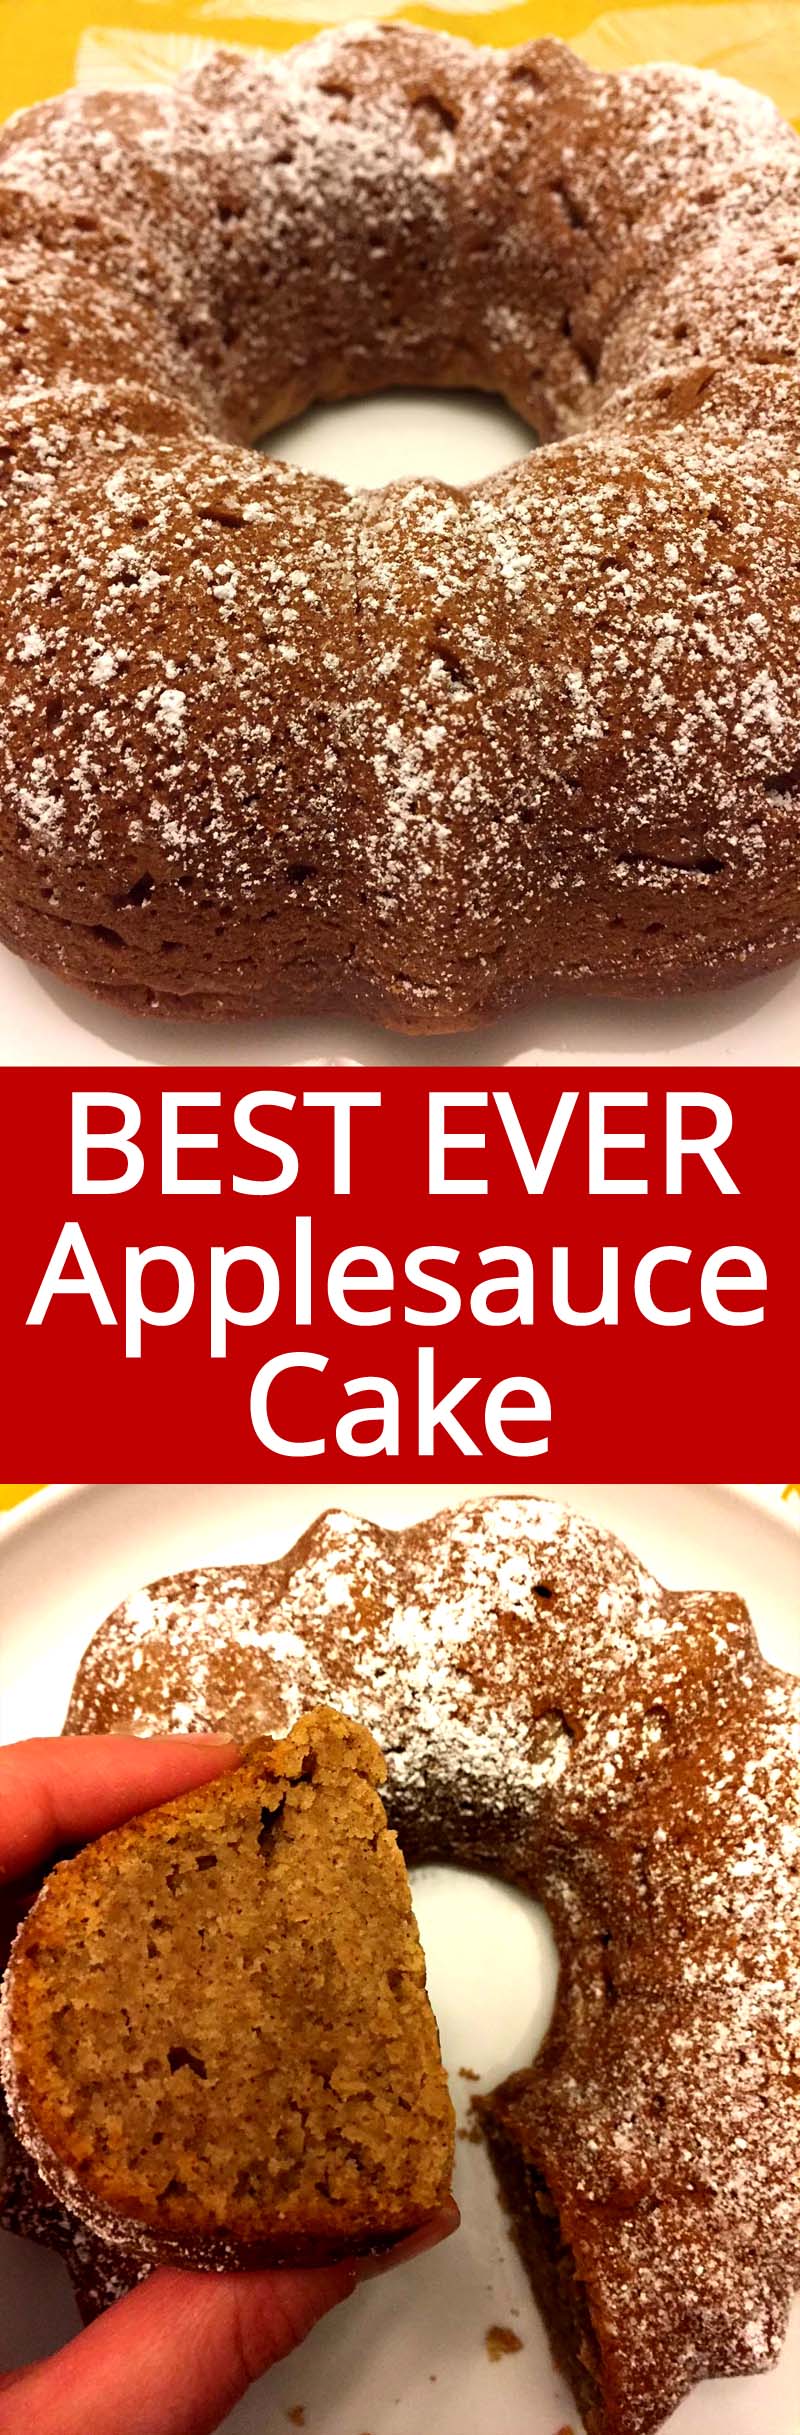 Applesauce Cake Recipe - Moist Cinnamon Applesauce Bundt ...